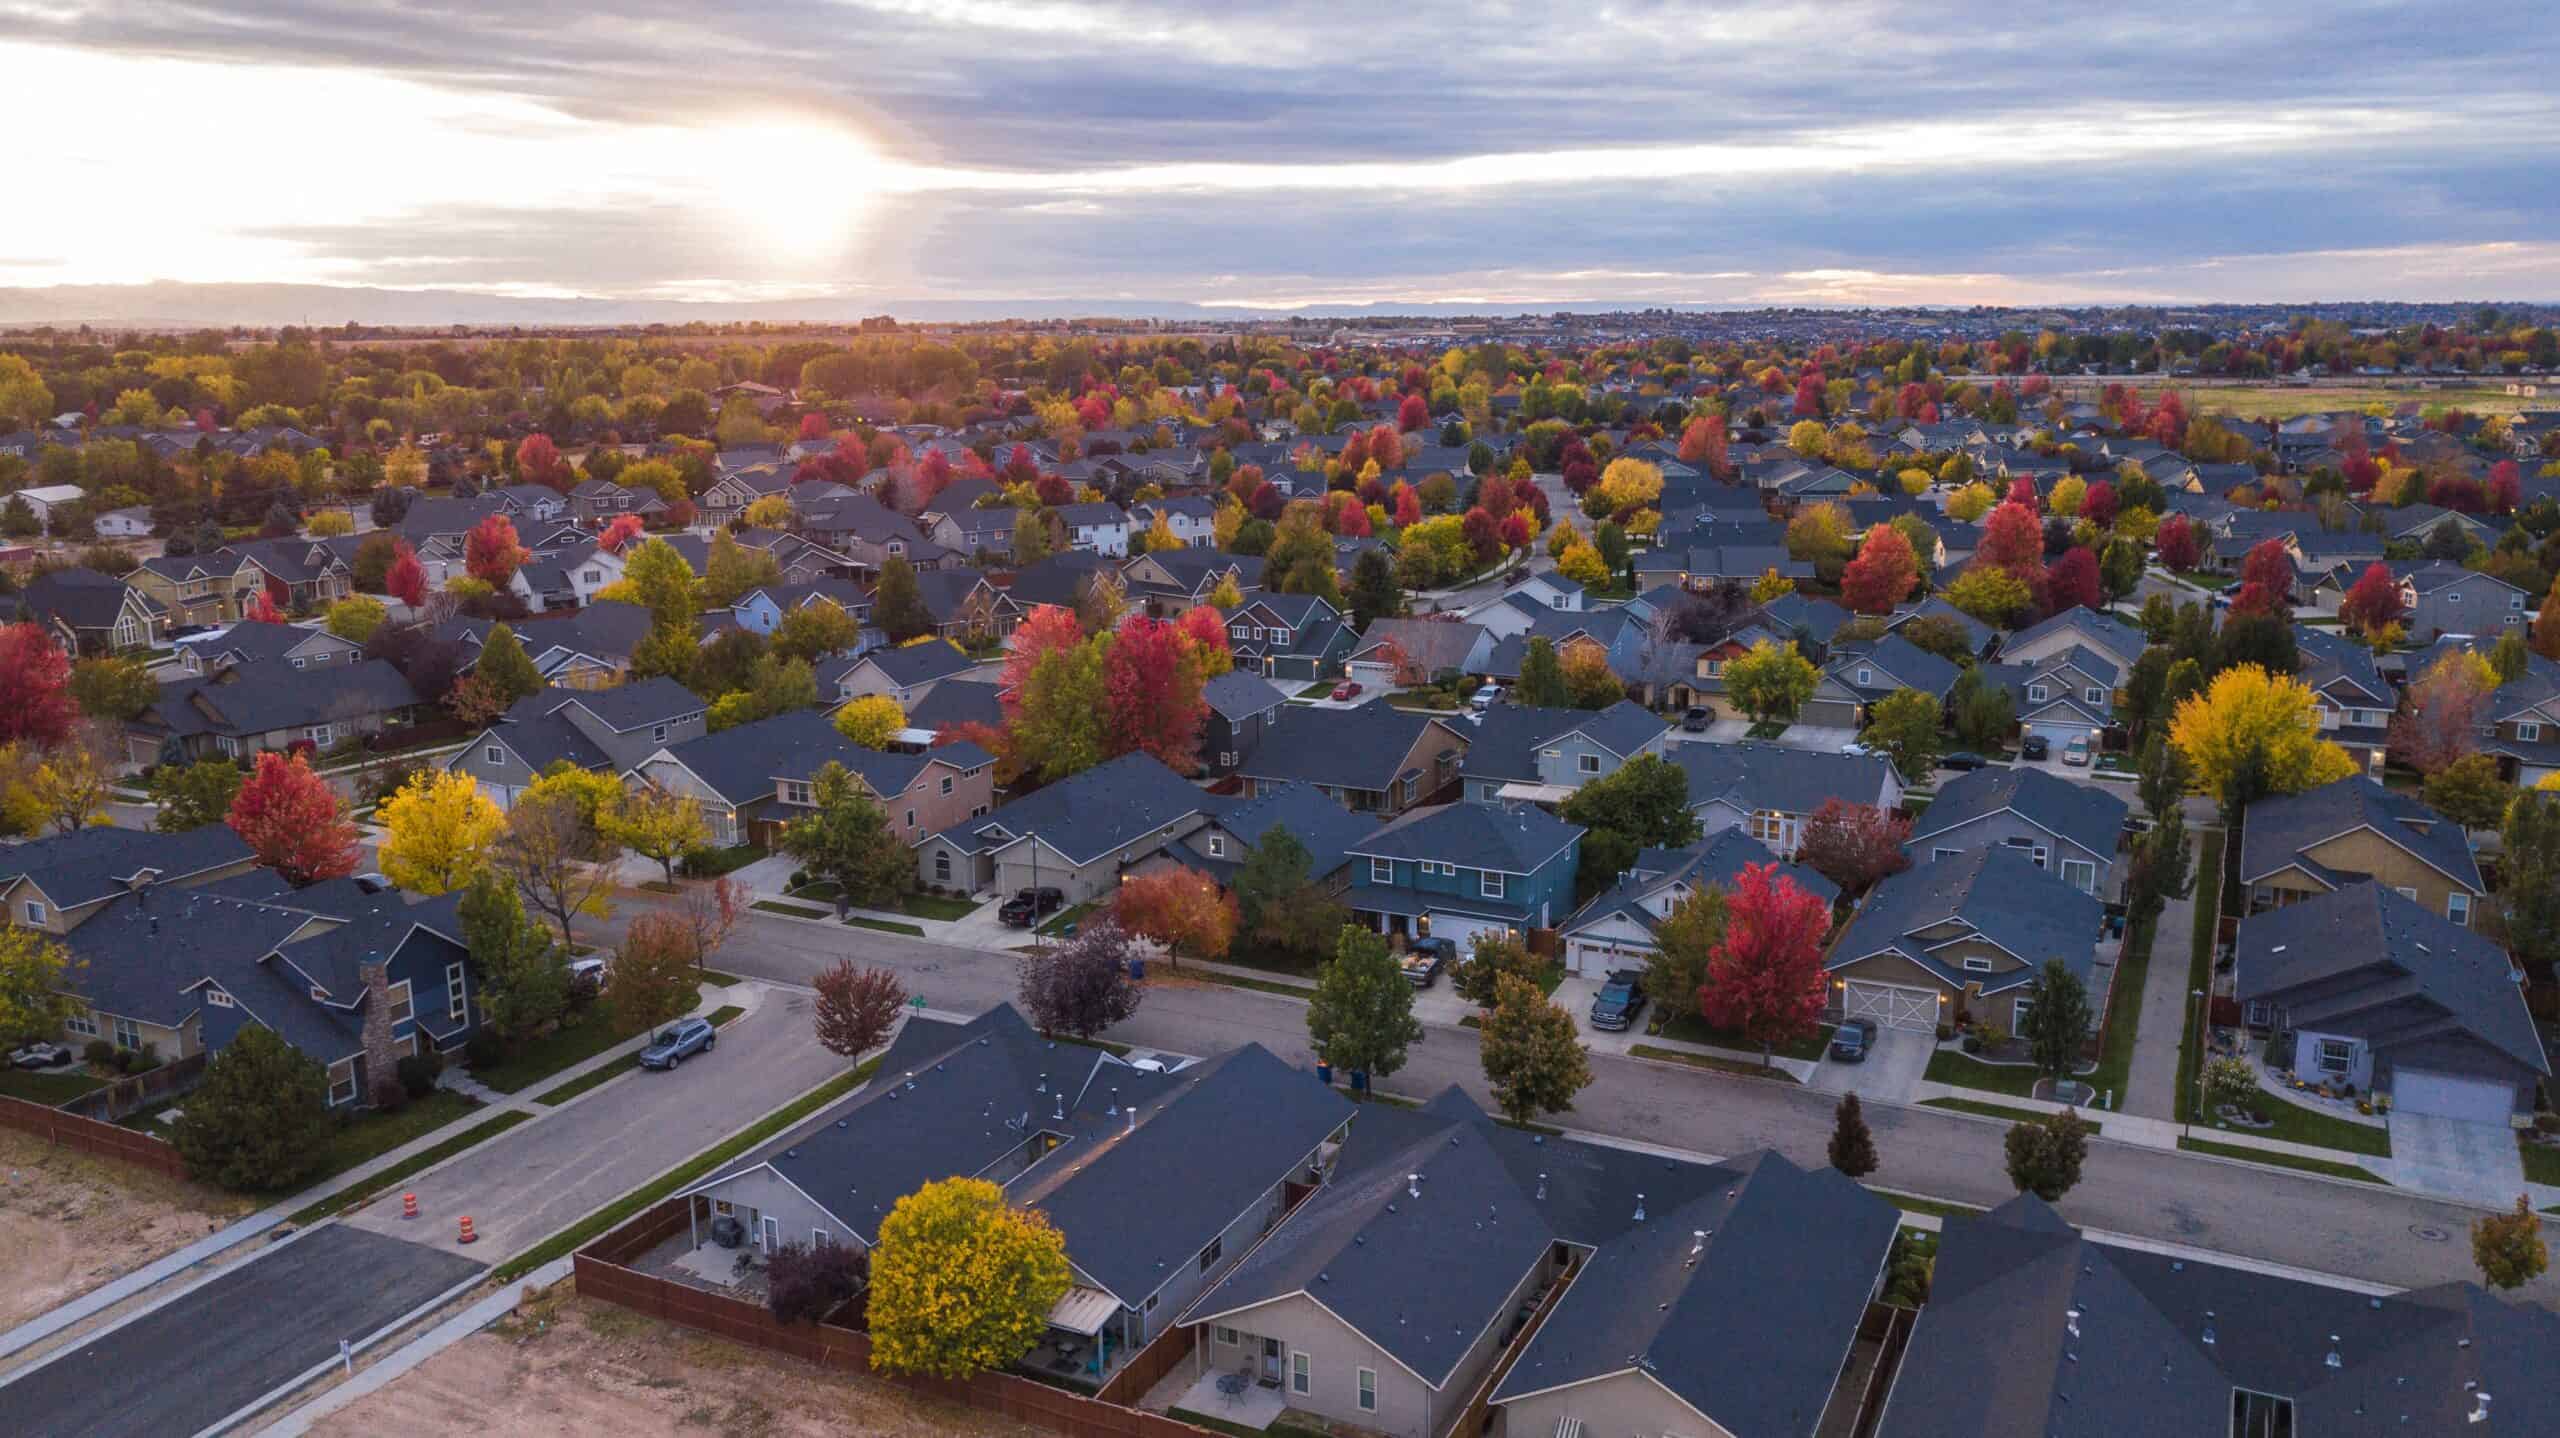 Aerial image of neighborhood full of houses